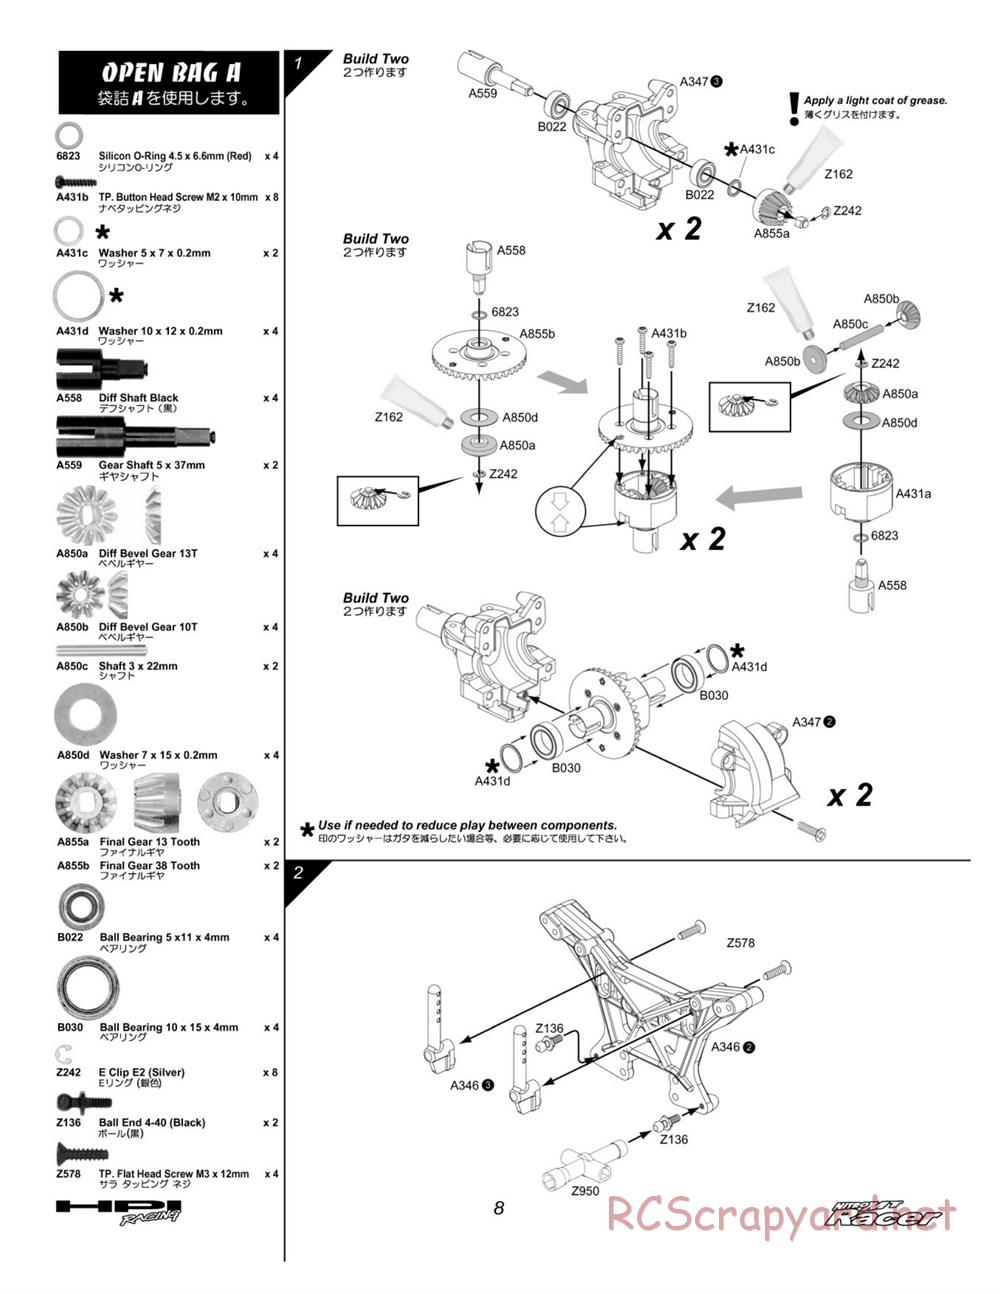 HPI - Nitro MT Racer - Manual - Page 8